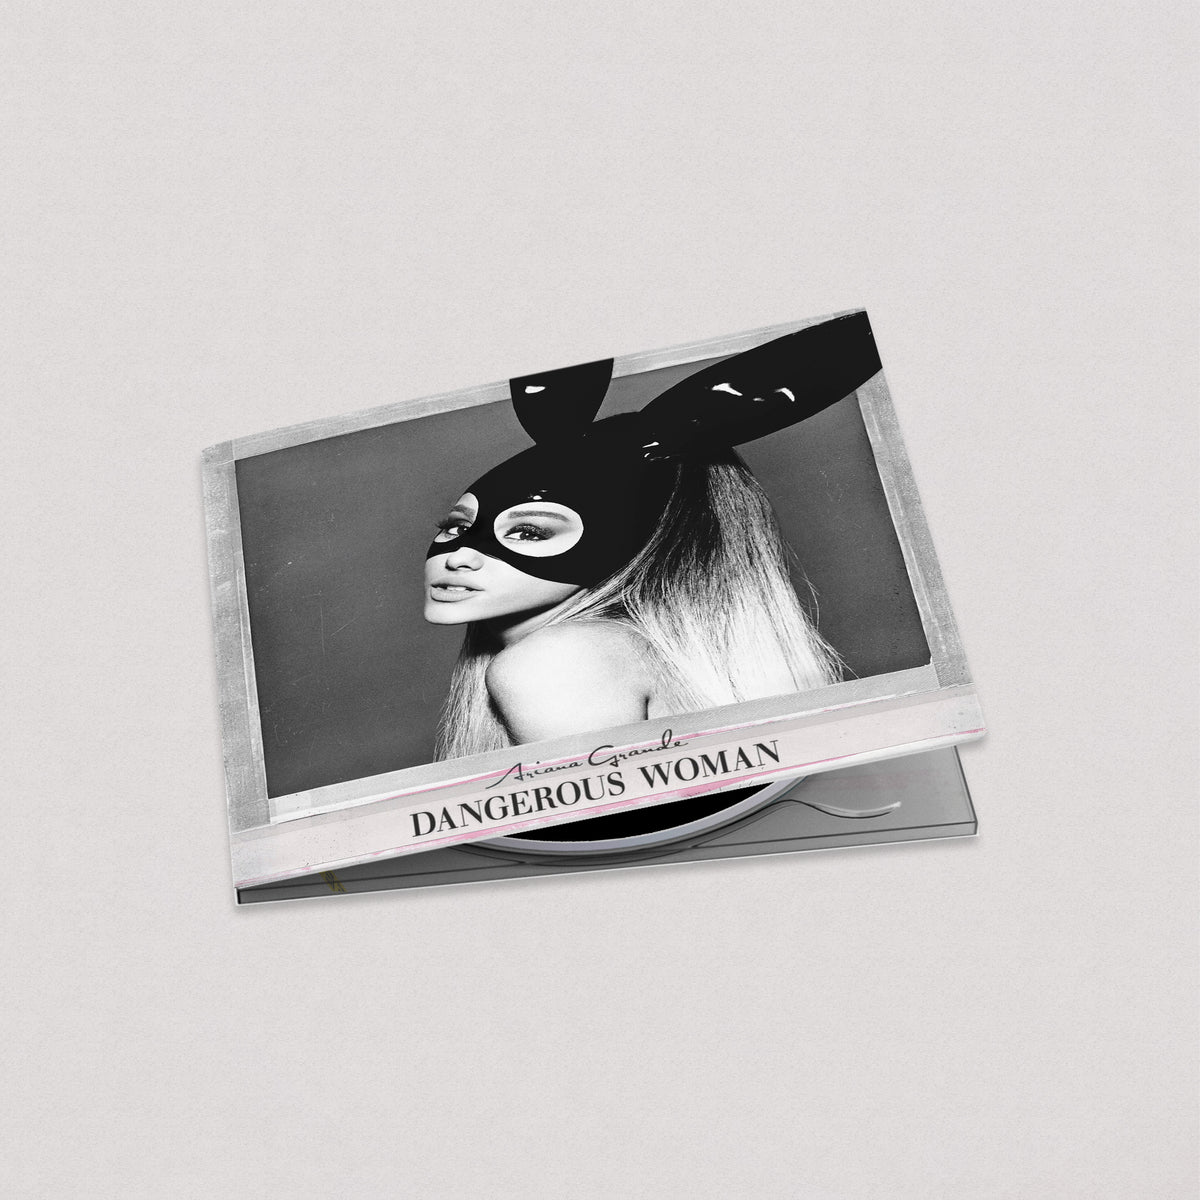 Vinilo - Dangerous Woman - Ariana Grande  Dangerous woman, Vinyl, Vinyl  aesthetic